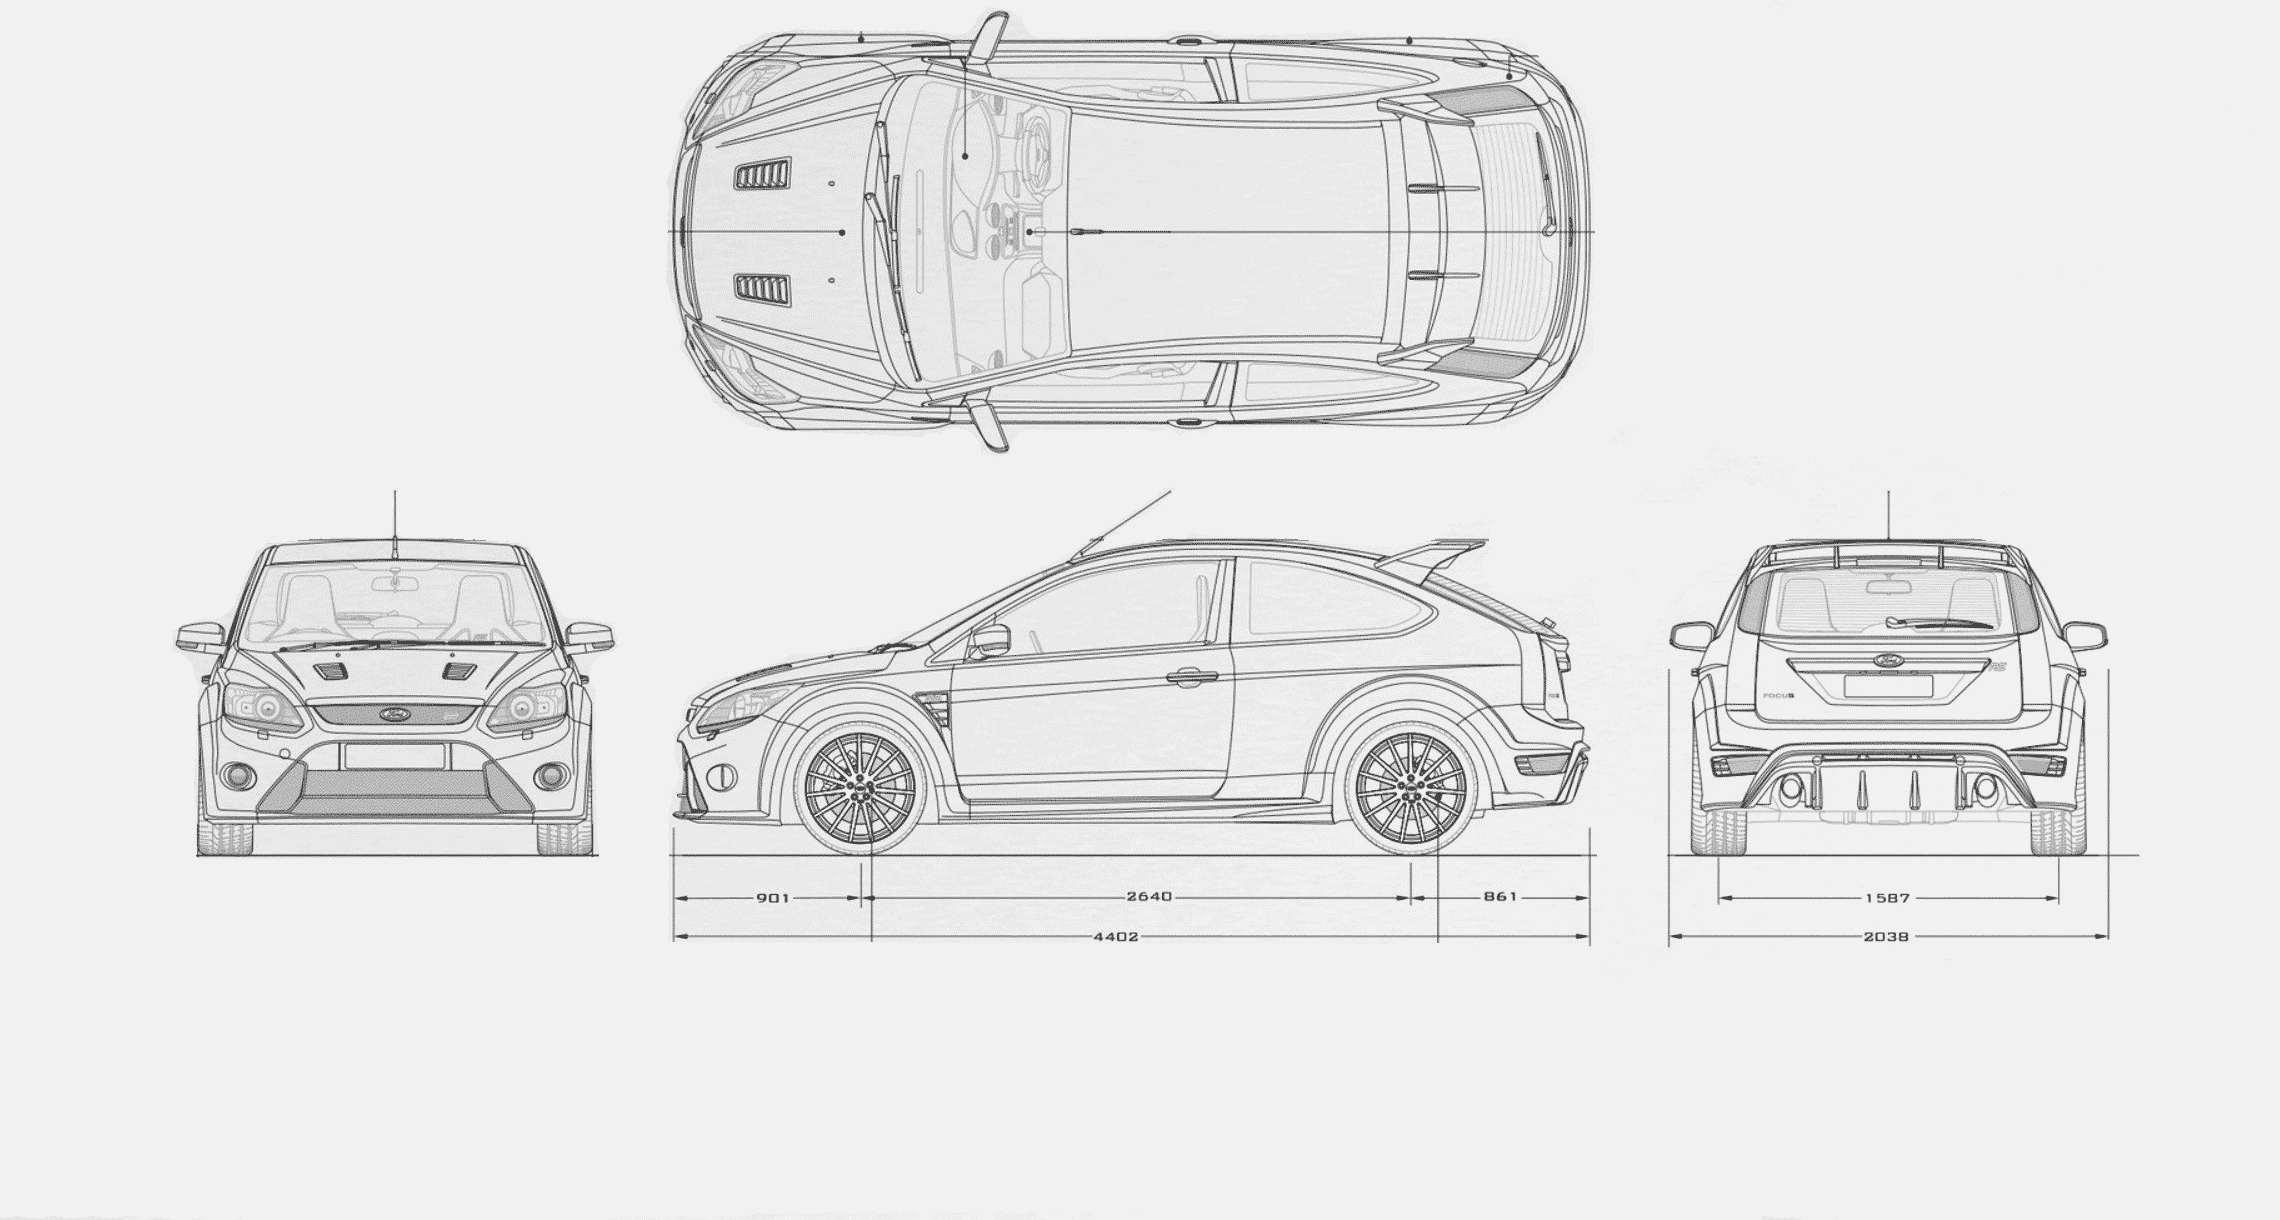 Ford Focus RS blueprint